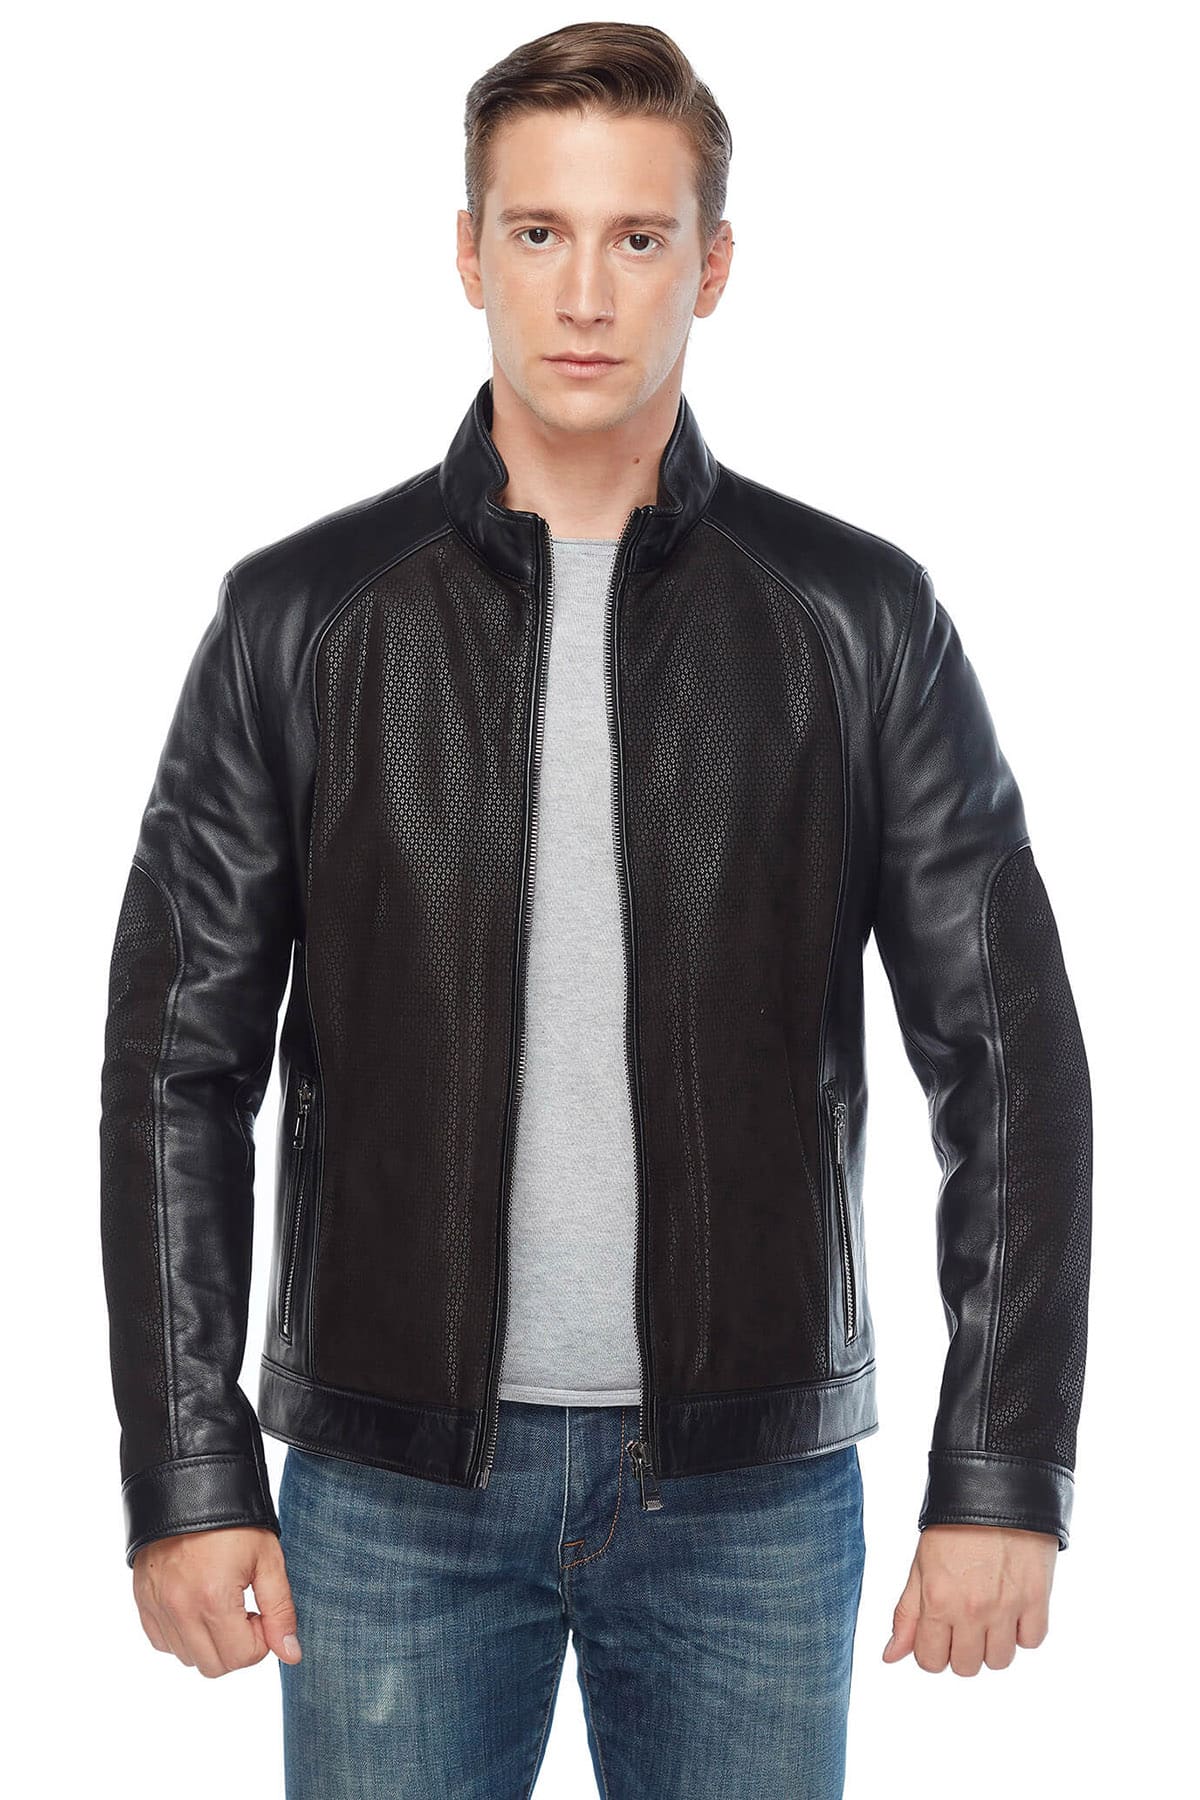 Ayzo Products Leather Jackets